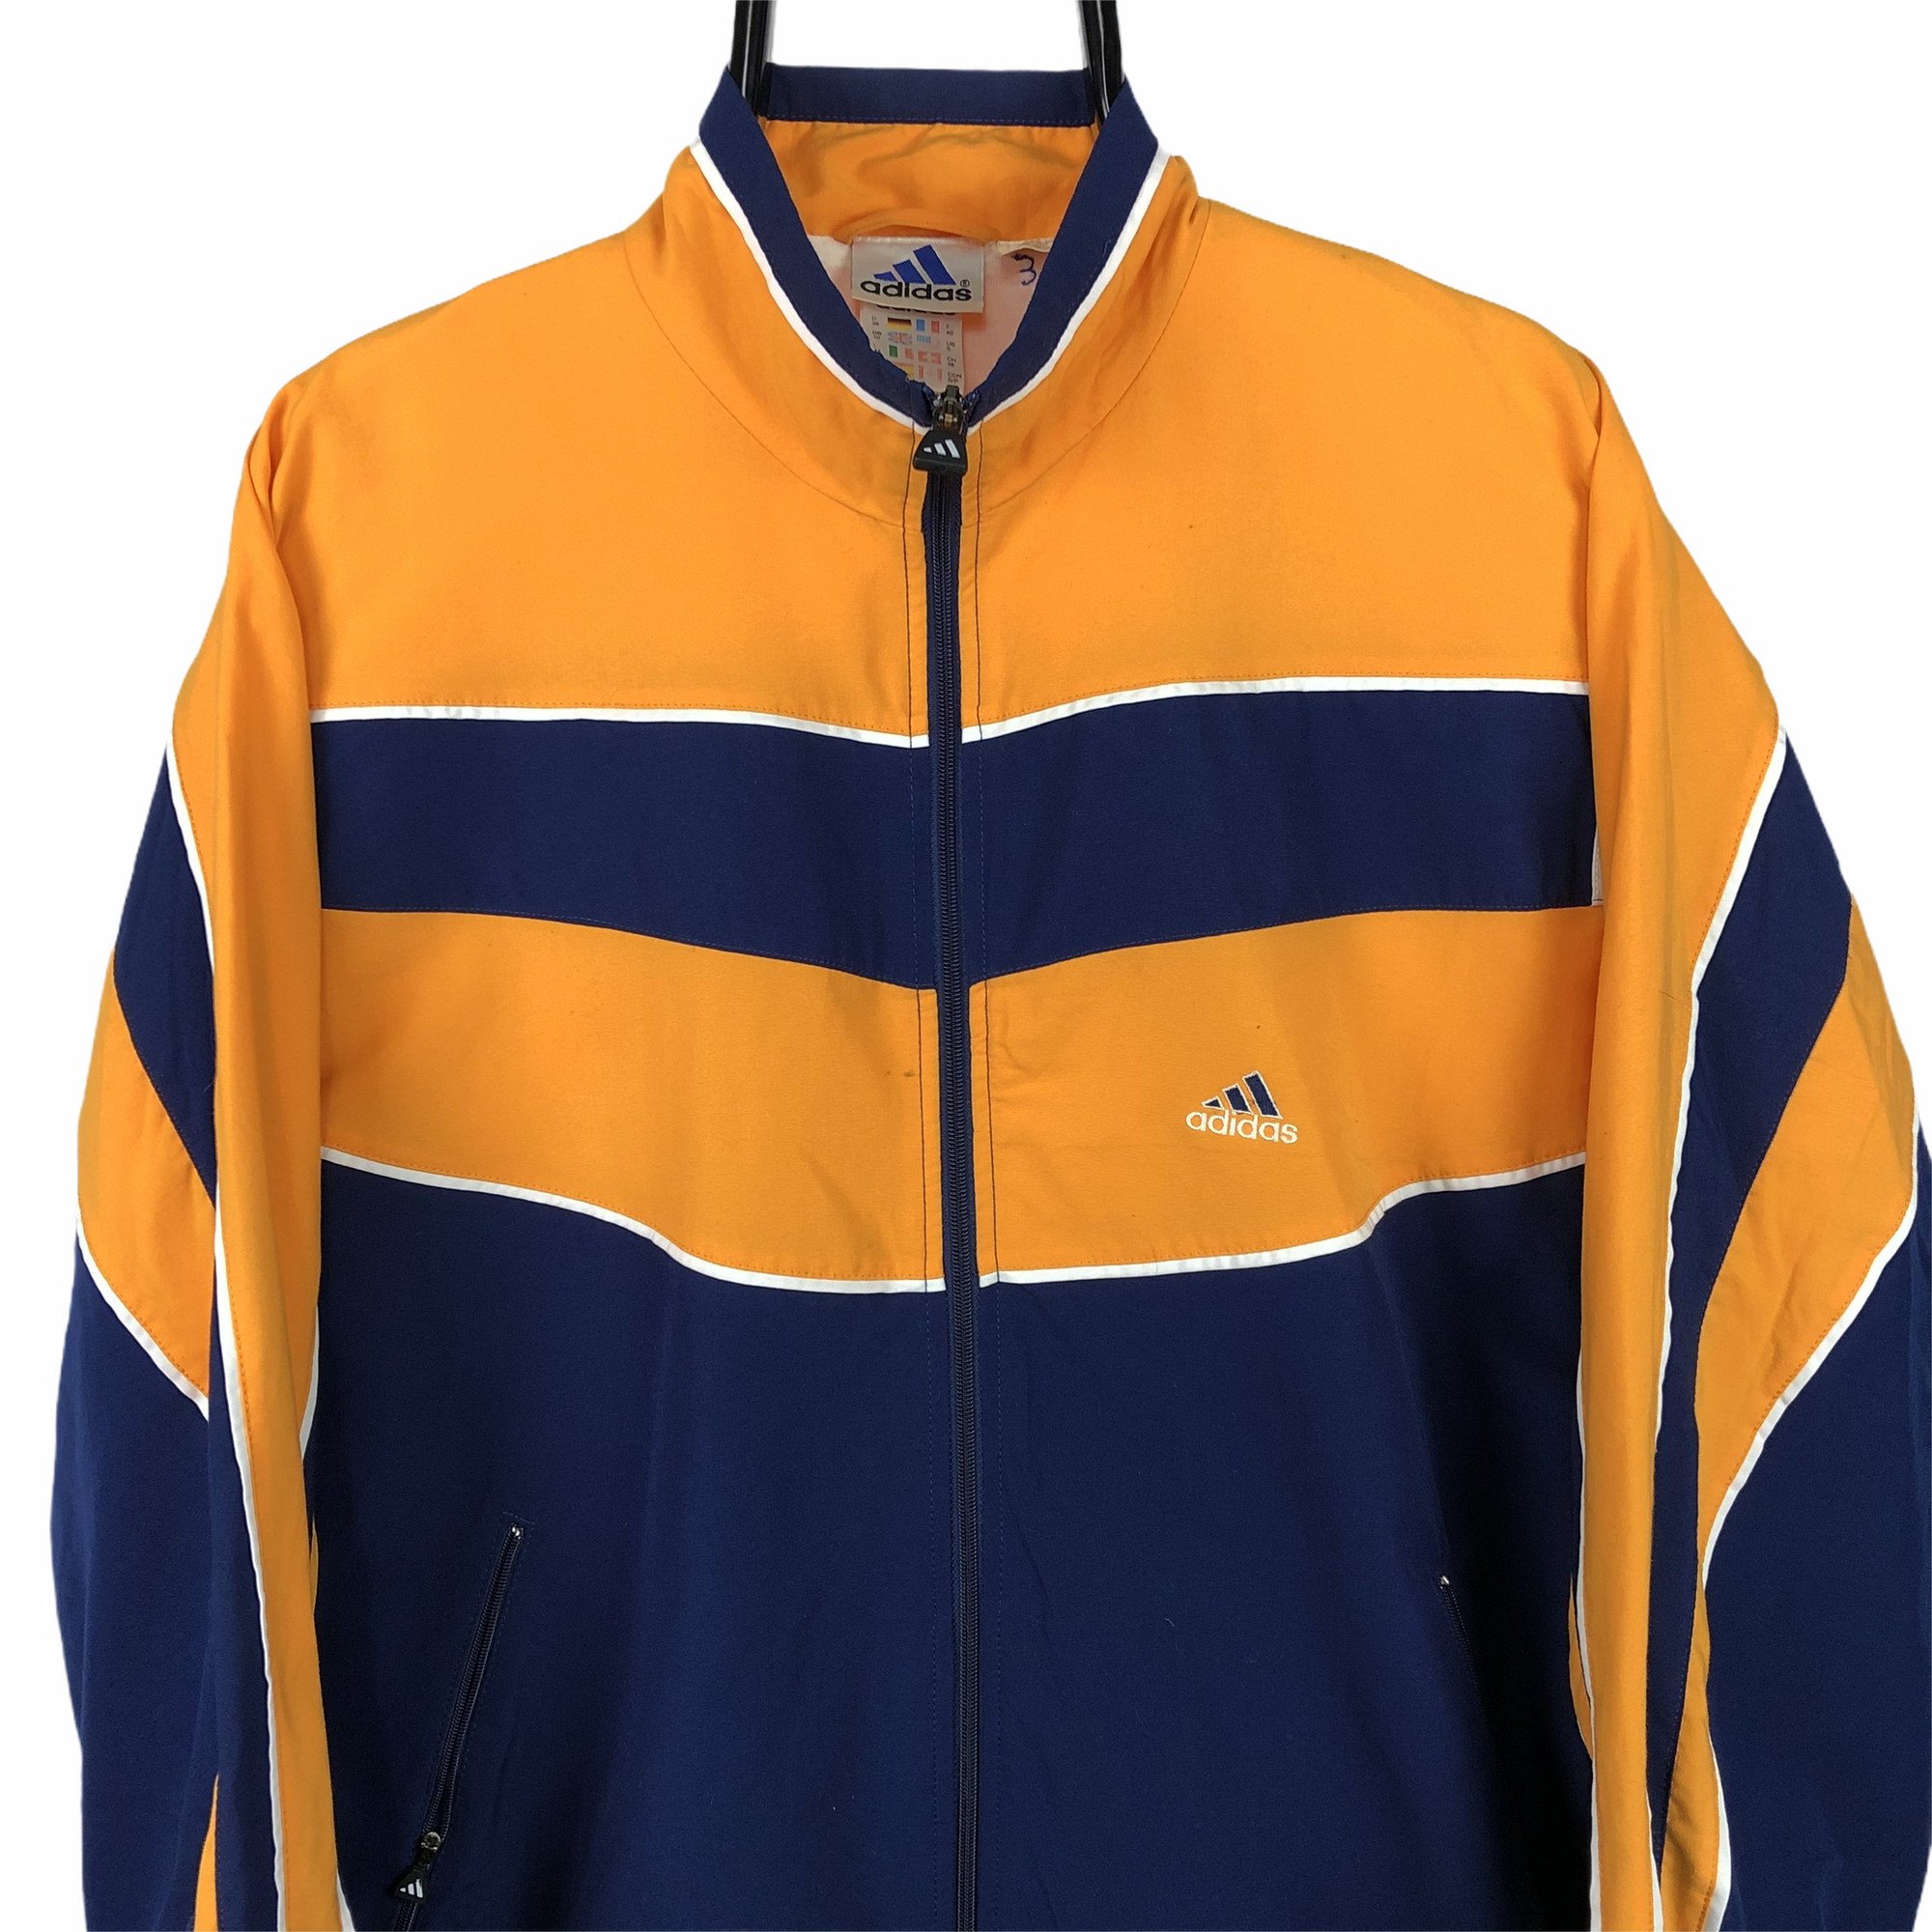 Vintage 90s Adidas Track Jacket in Navy/Yellow - Men's Medium/Women's Large